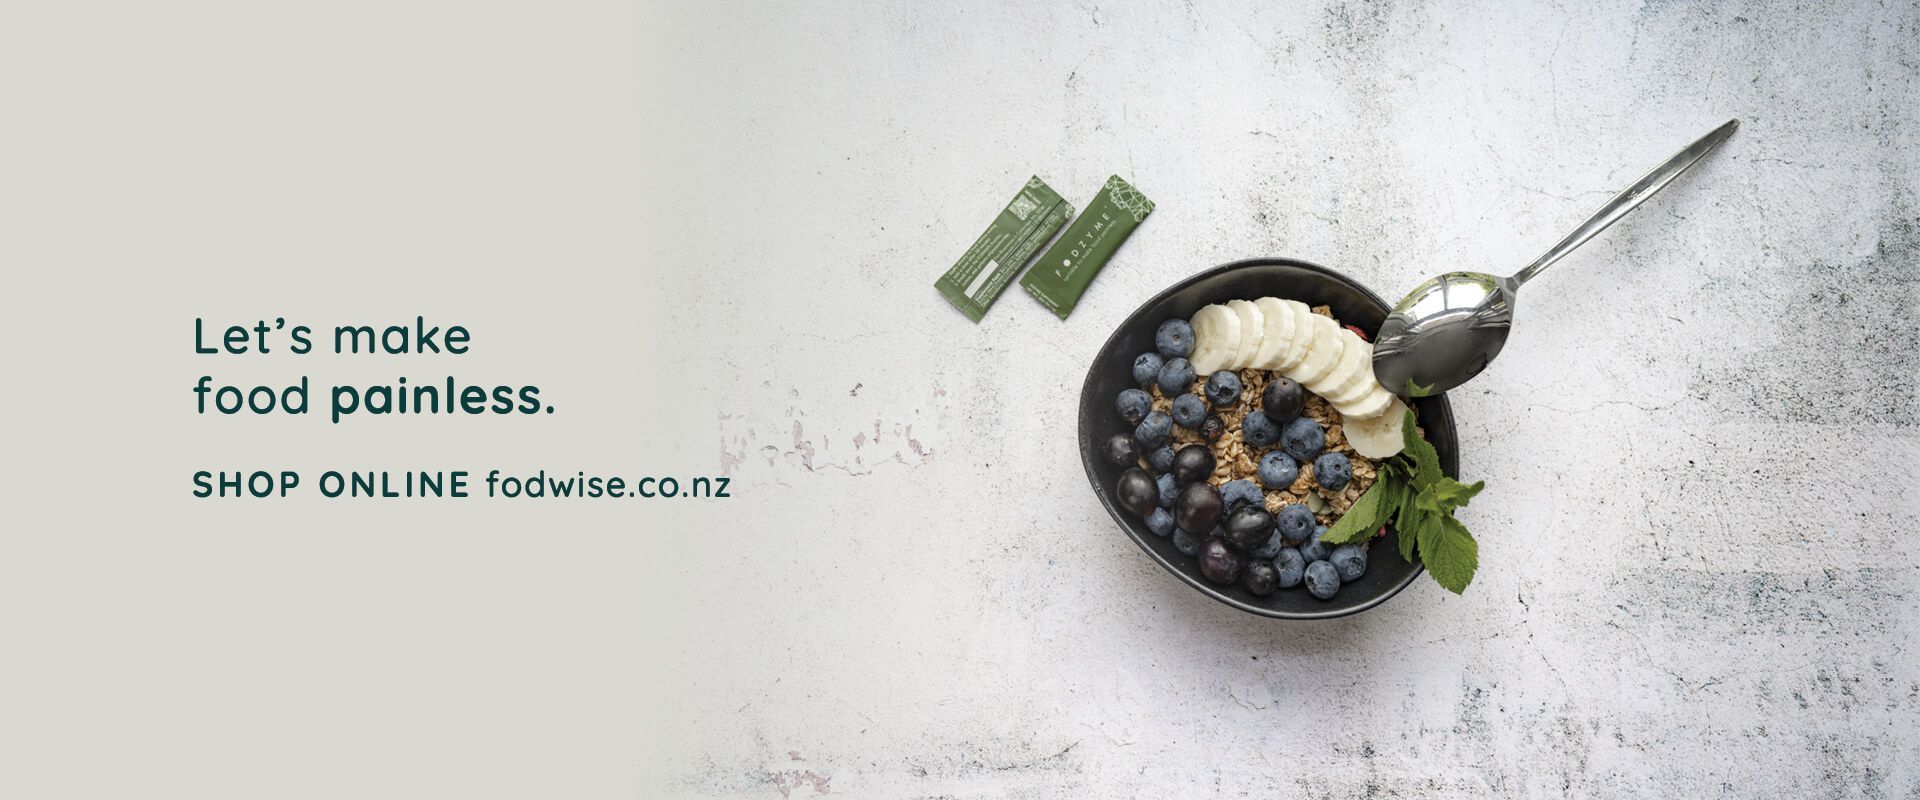 Fodwise branding by Vanilla Hayes Ltd in Blenheim, New Zealand